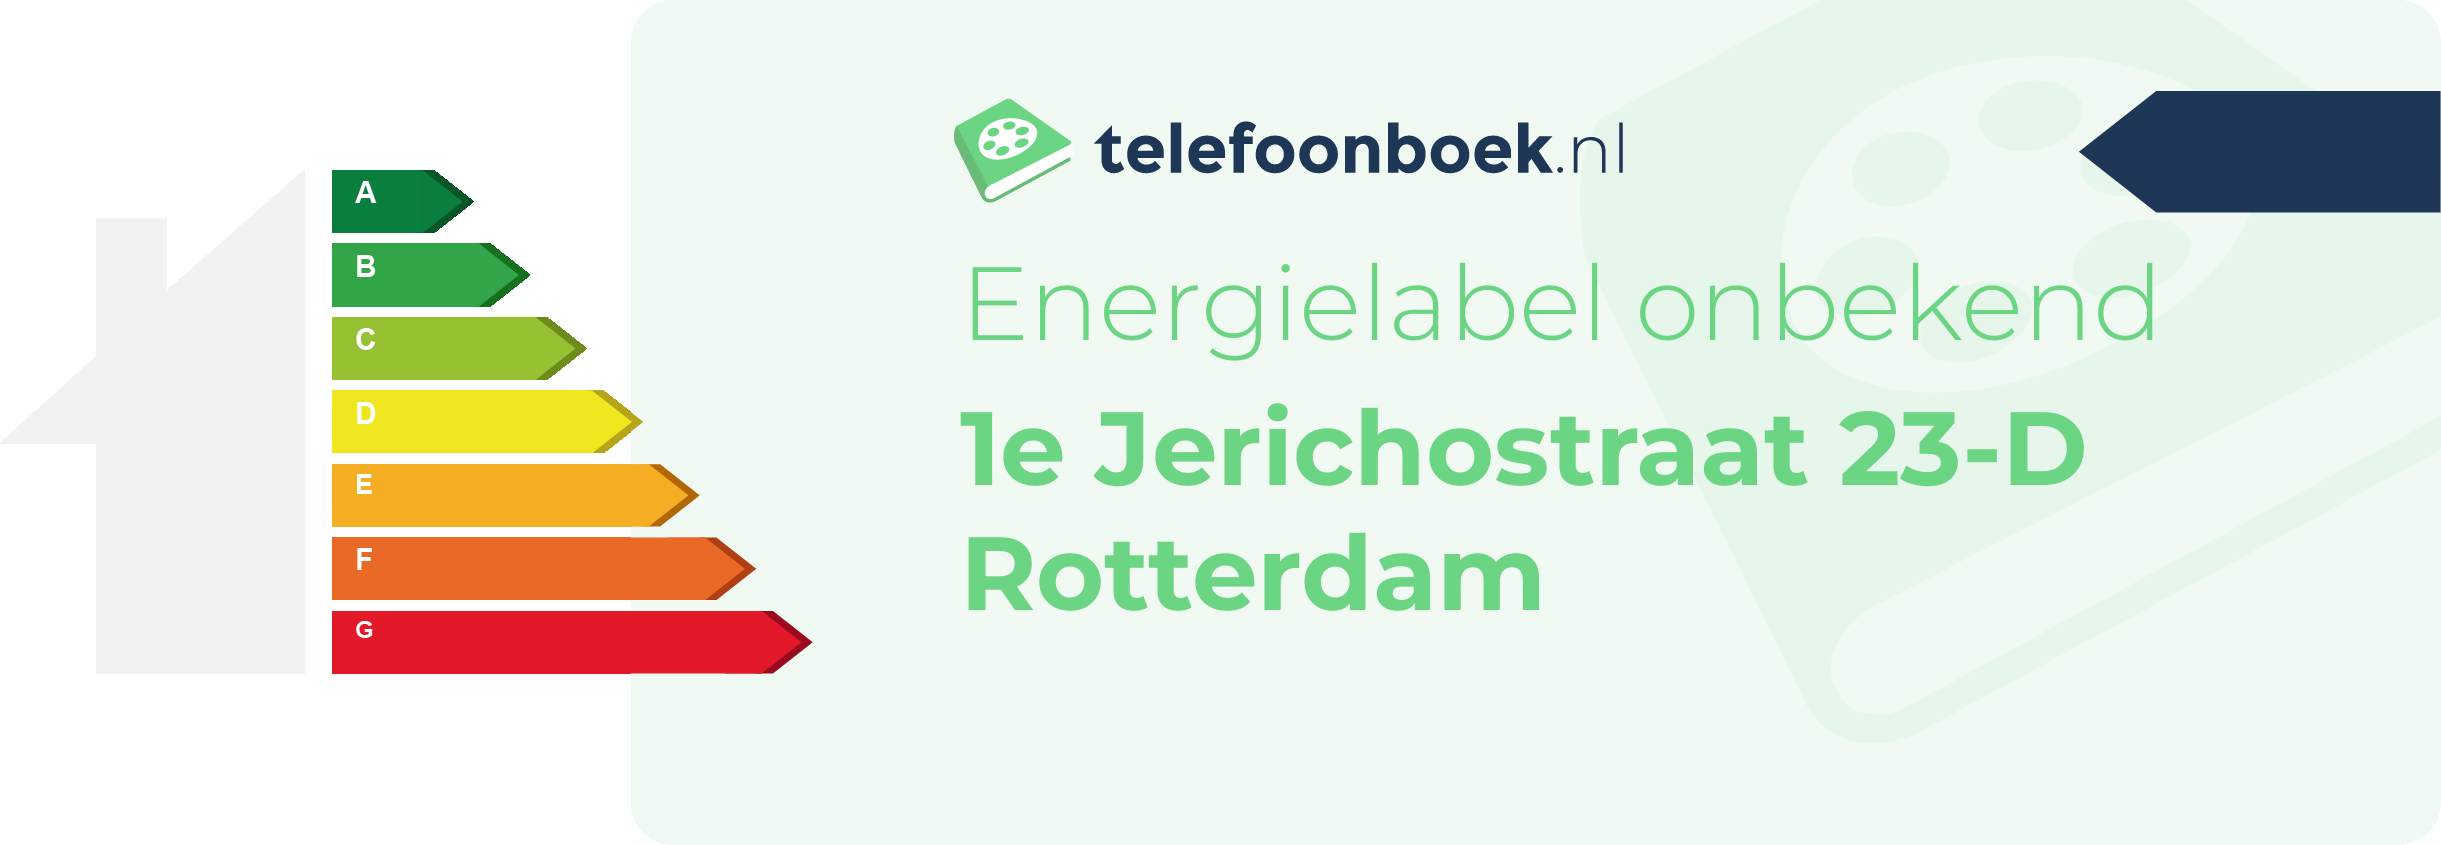 Energielabel 1e Jerichostraat 23-D Rotterdam